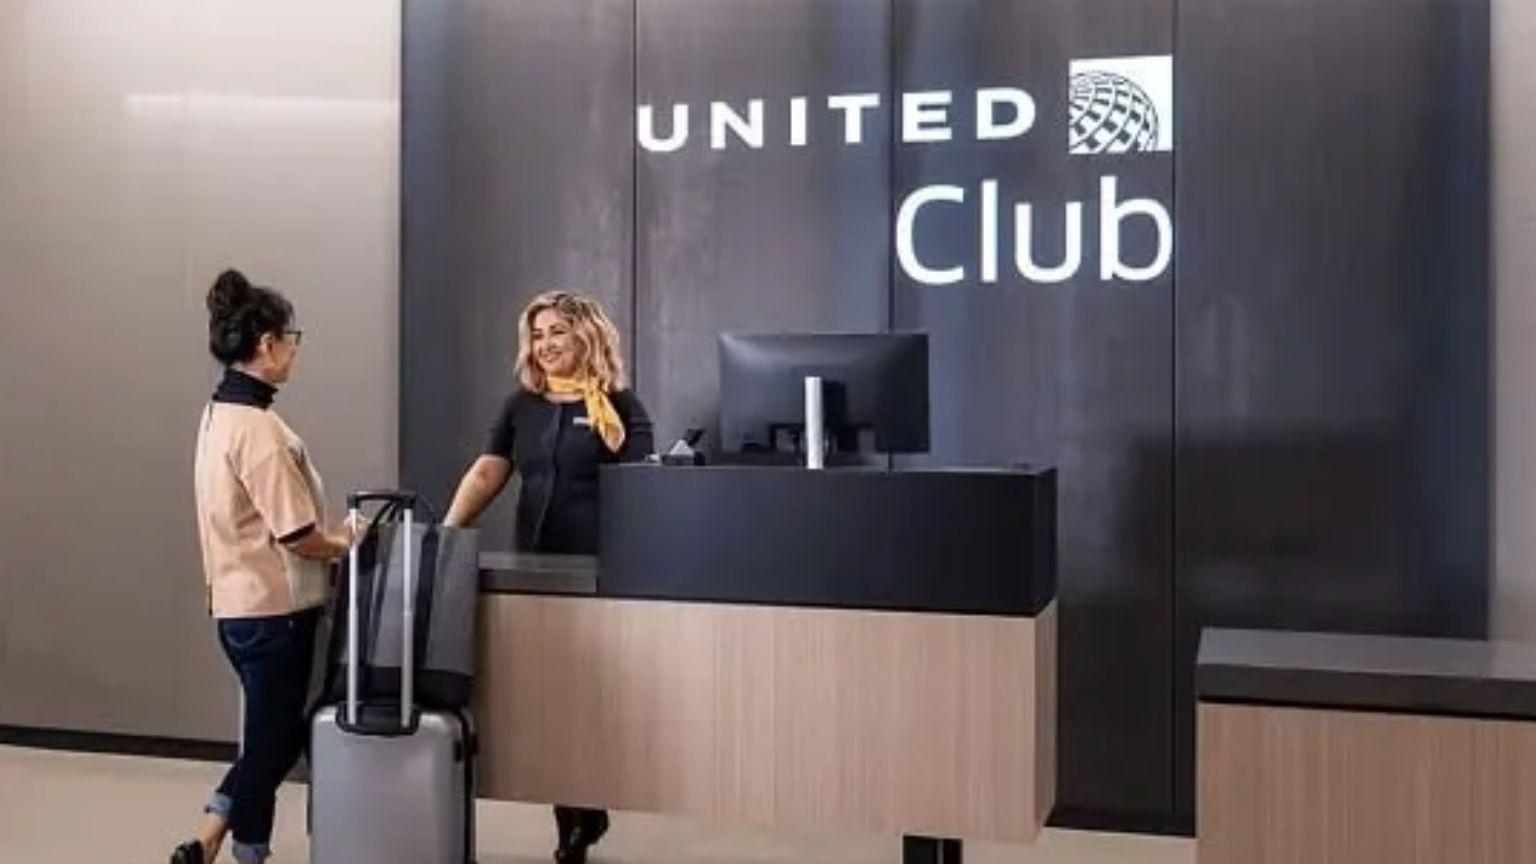 United Club Lounge, Main Terminal, Concourse C, Cleveland